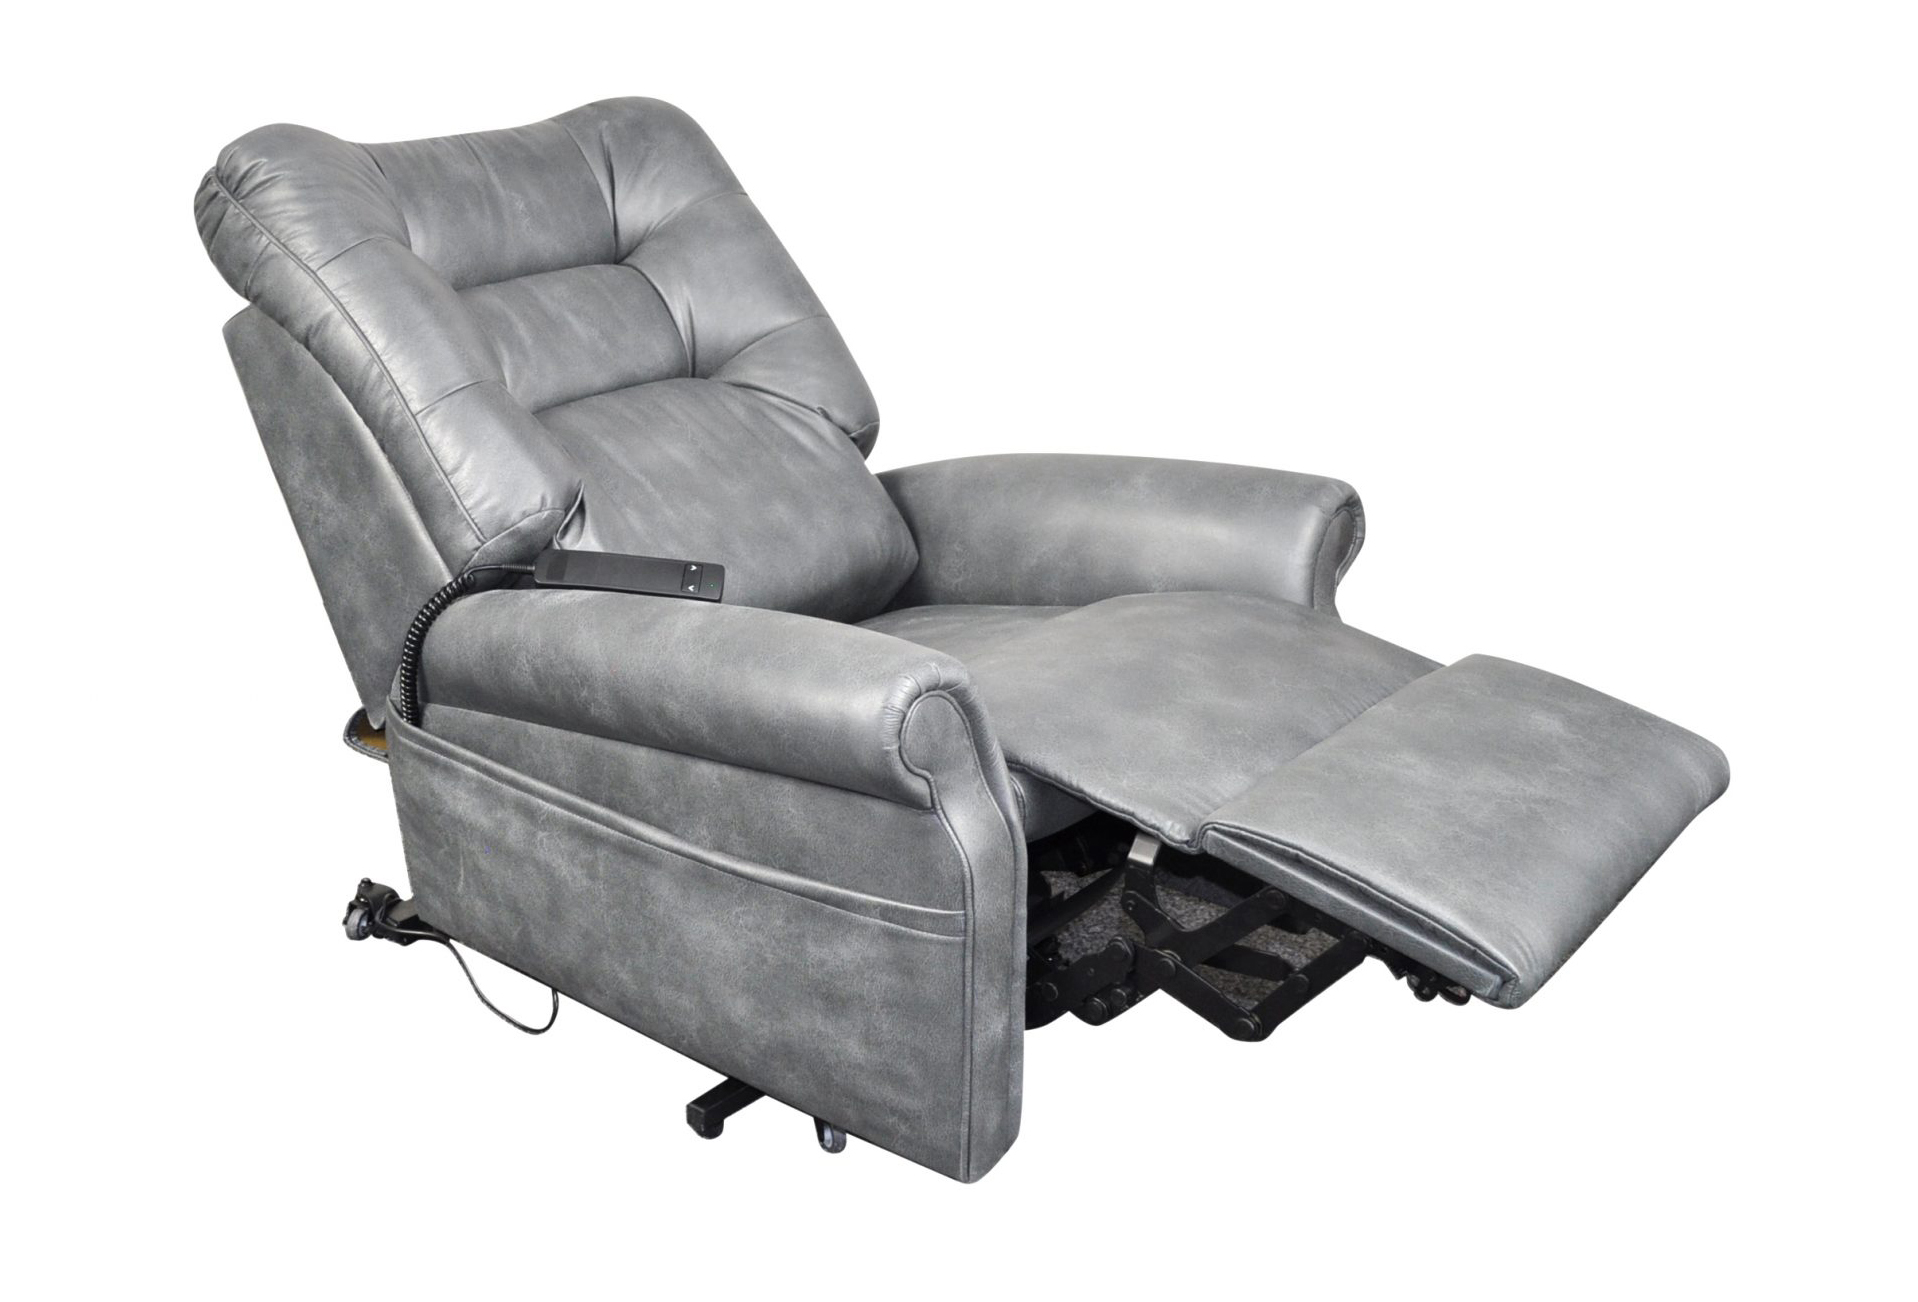  Brando - Wallglider Lift Recliner Chair (Large)